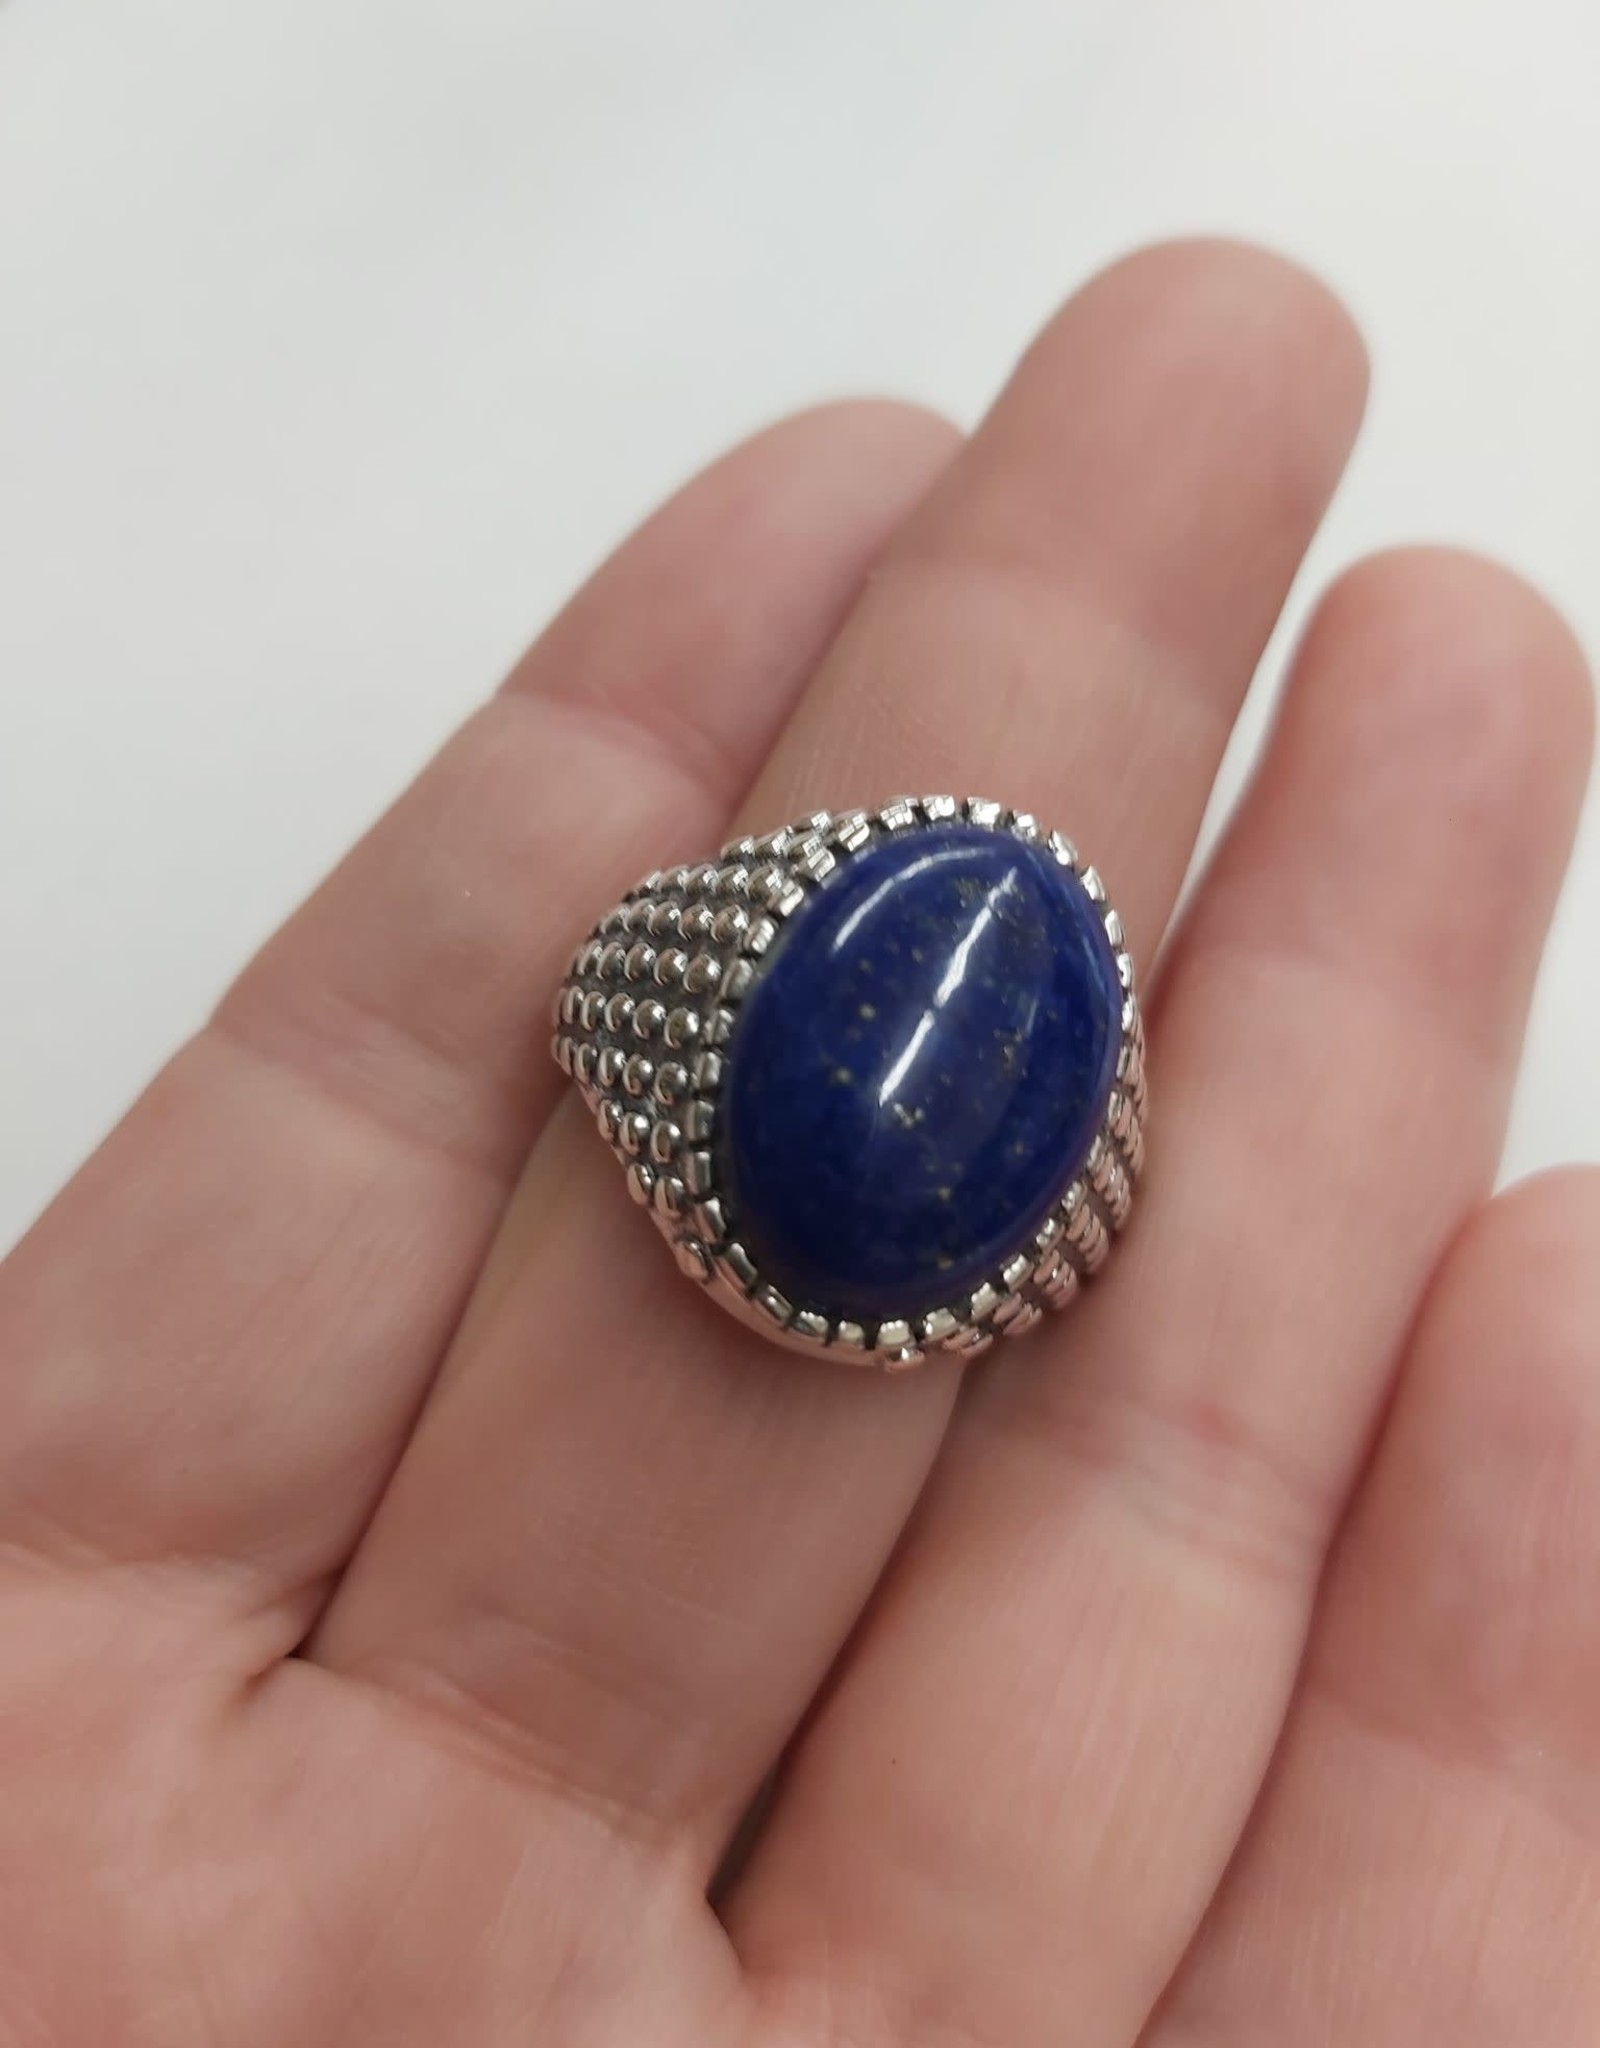 Lapis Lazuli Men's Ring - Size 12 Sterling Silver